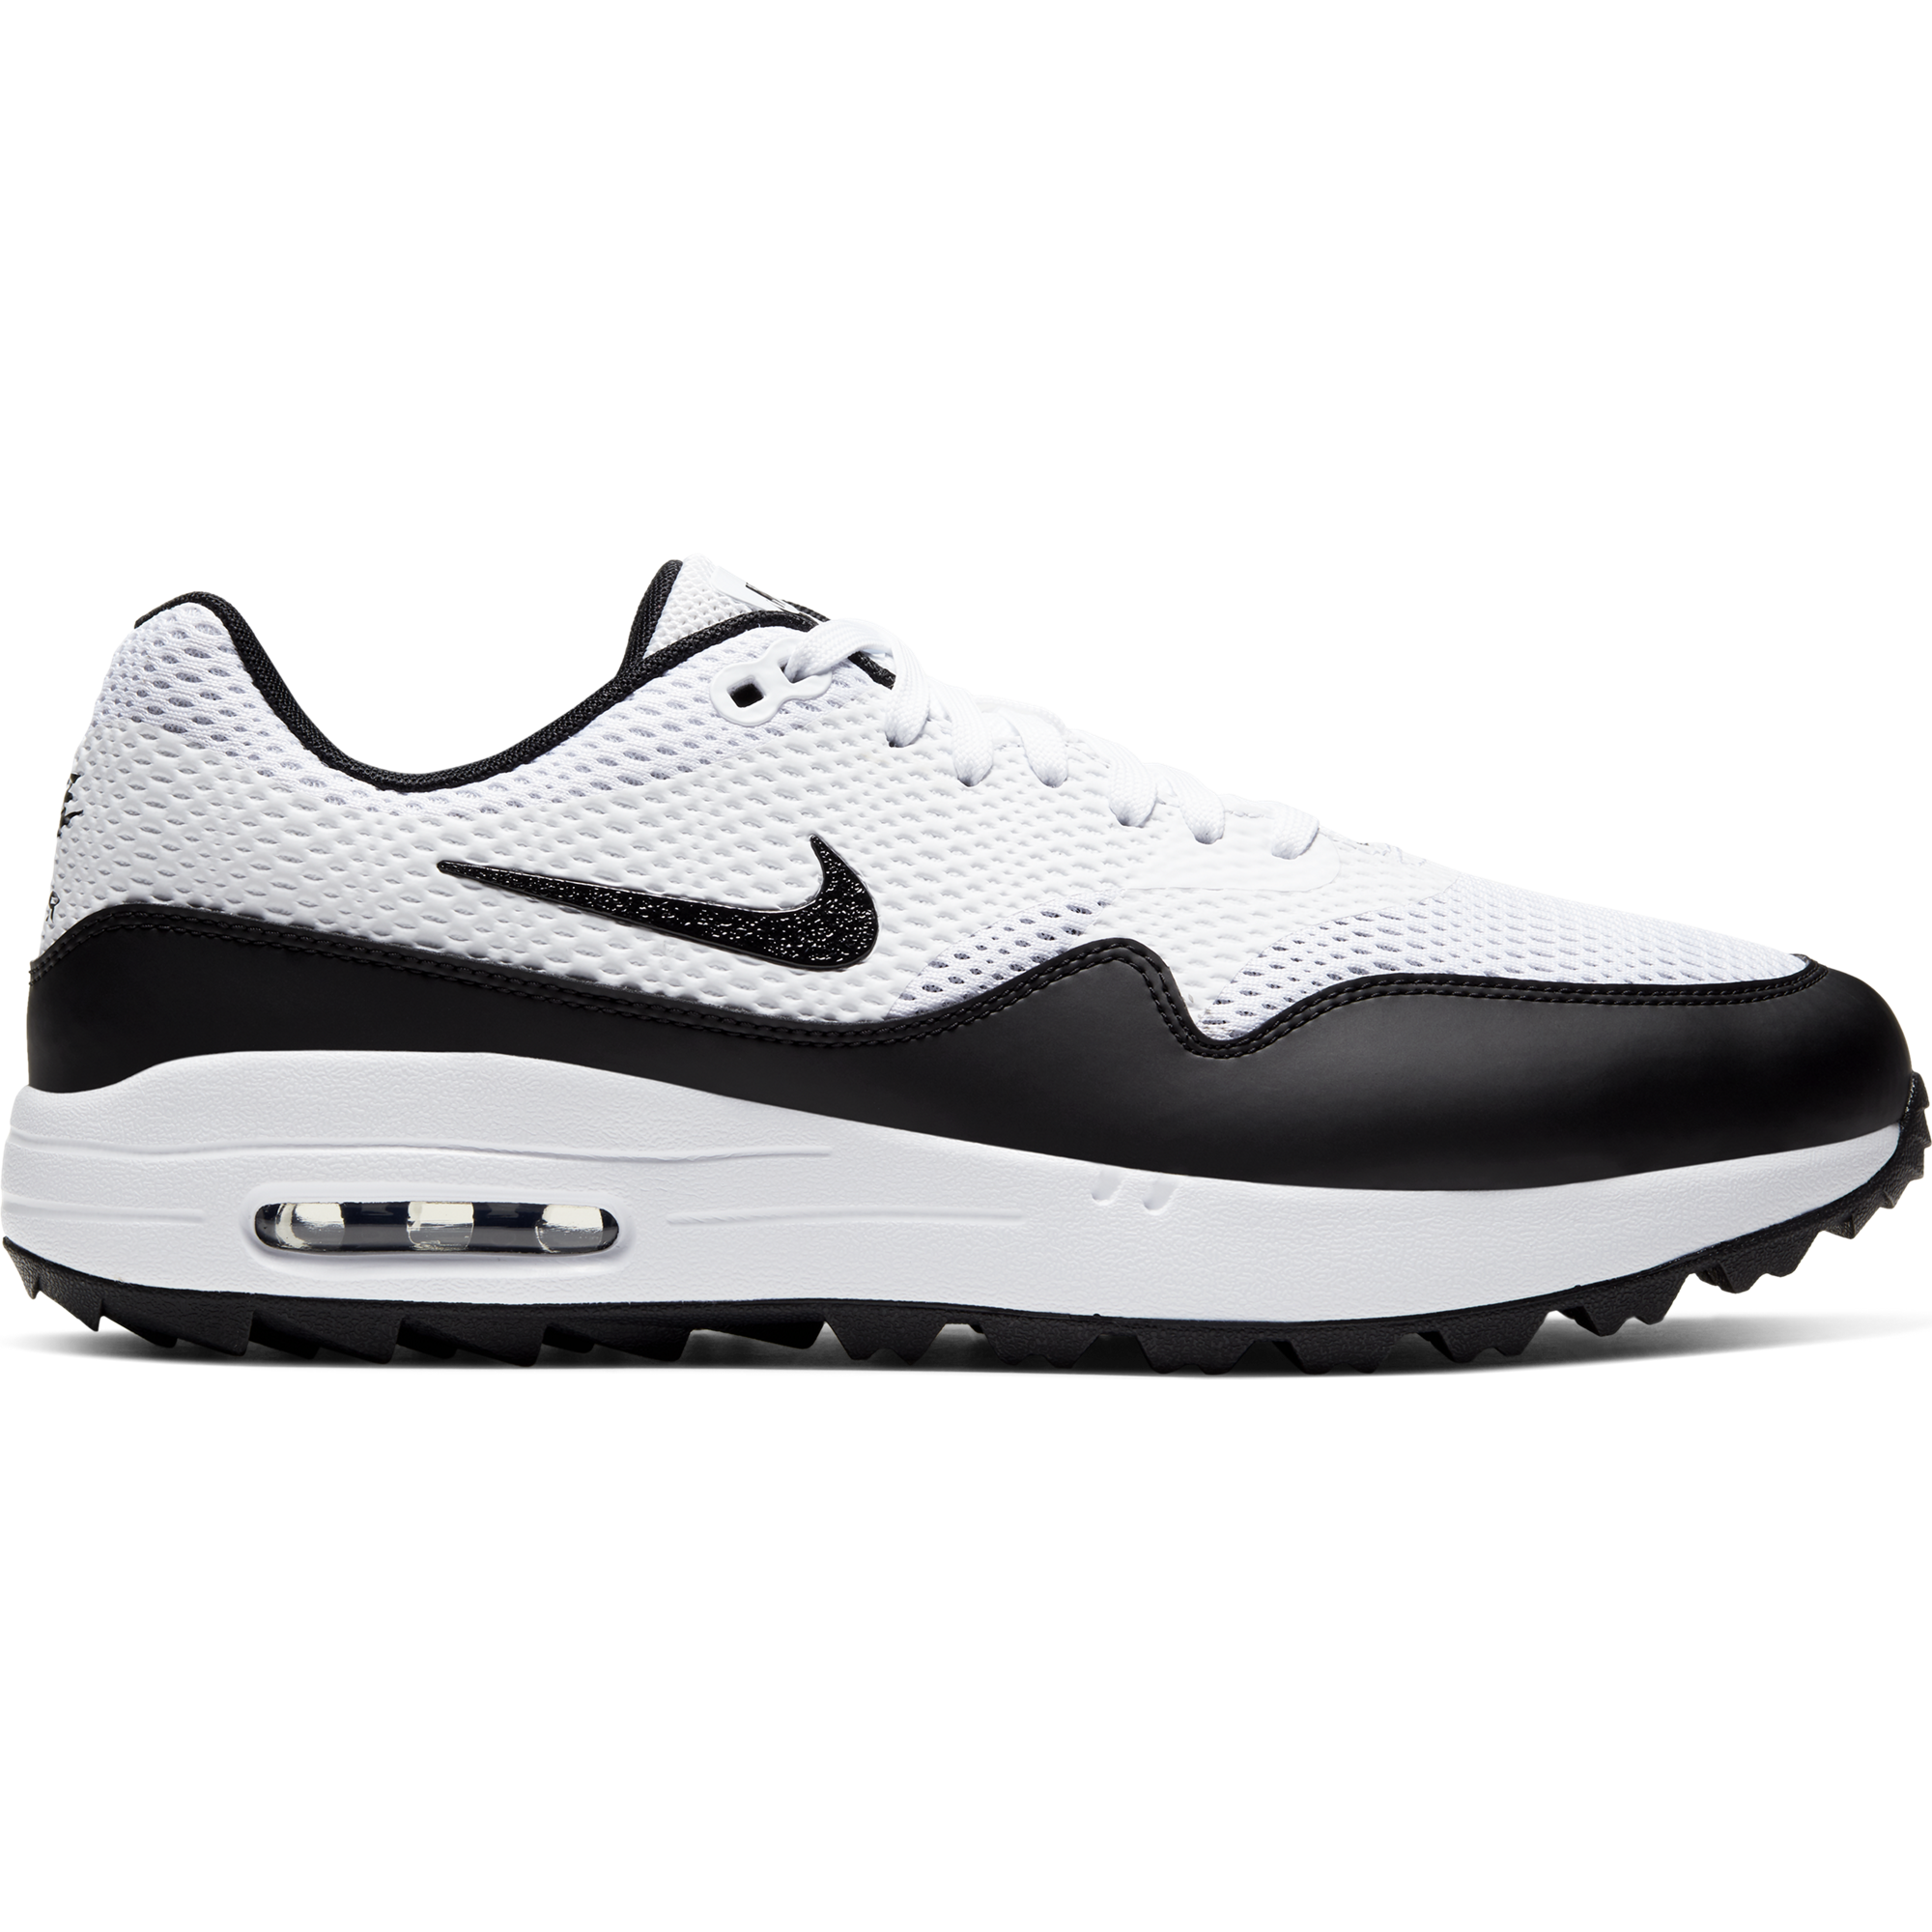 Nike Air Max 1 G Men's Golf Shoe 